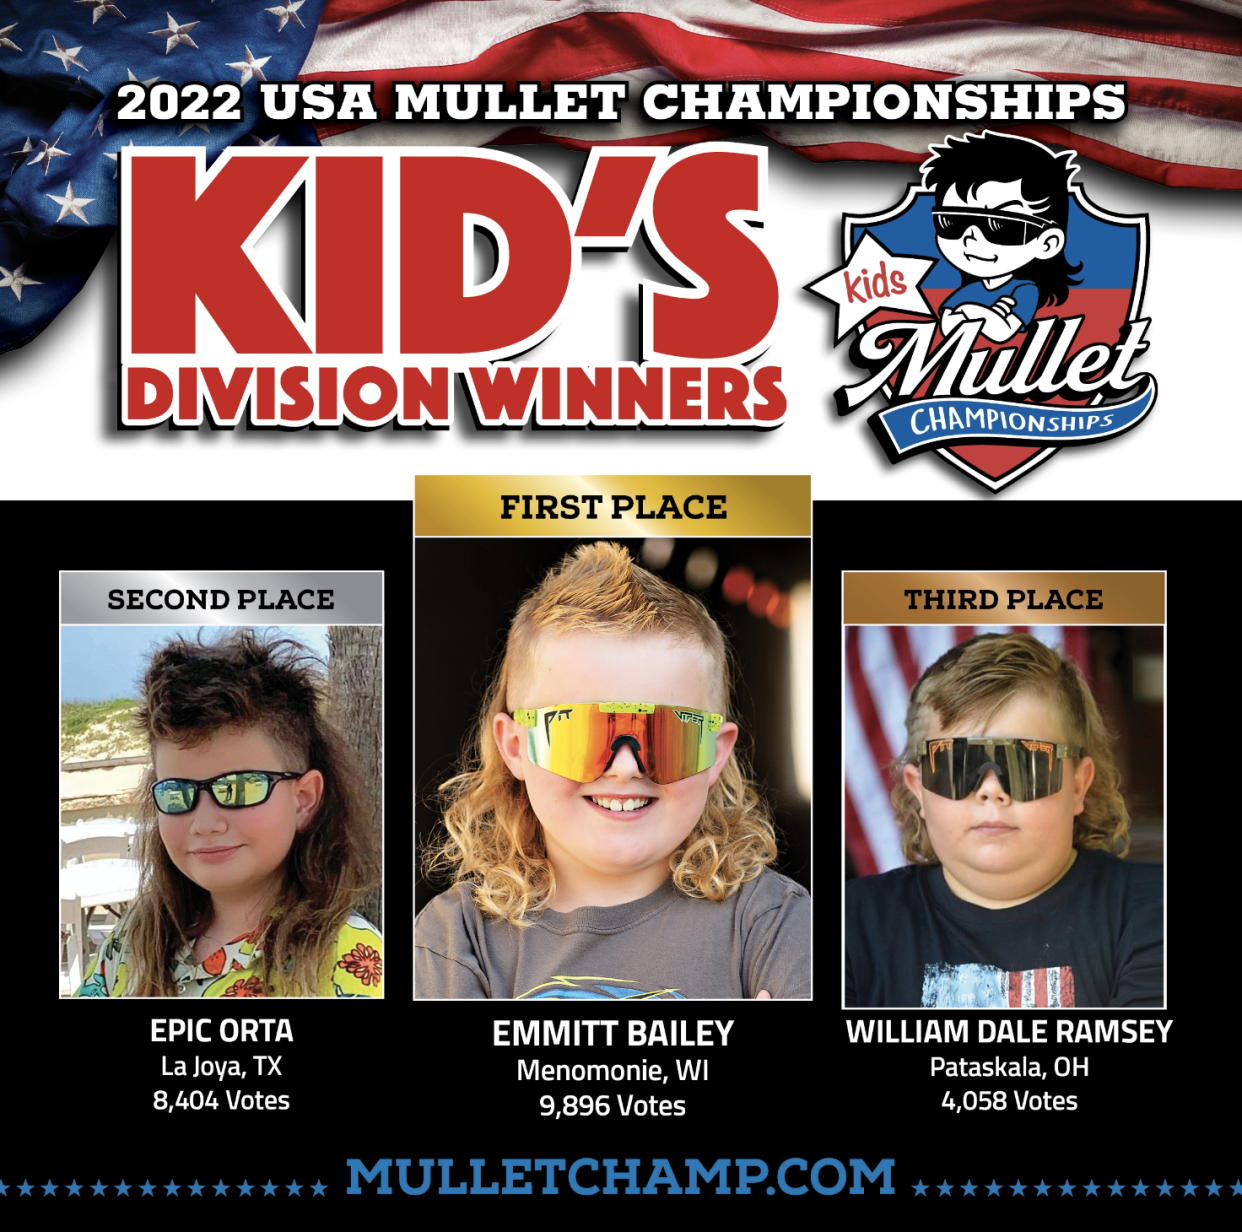 Photo: USA Mullet Championships
